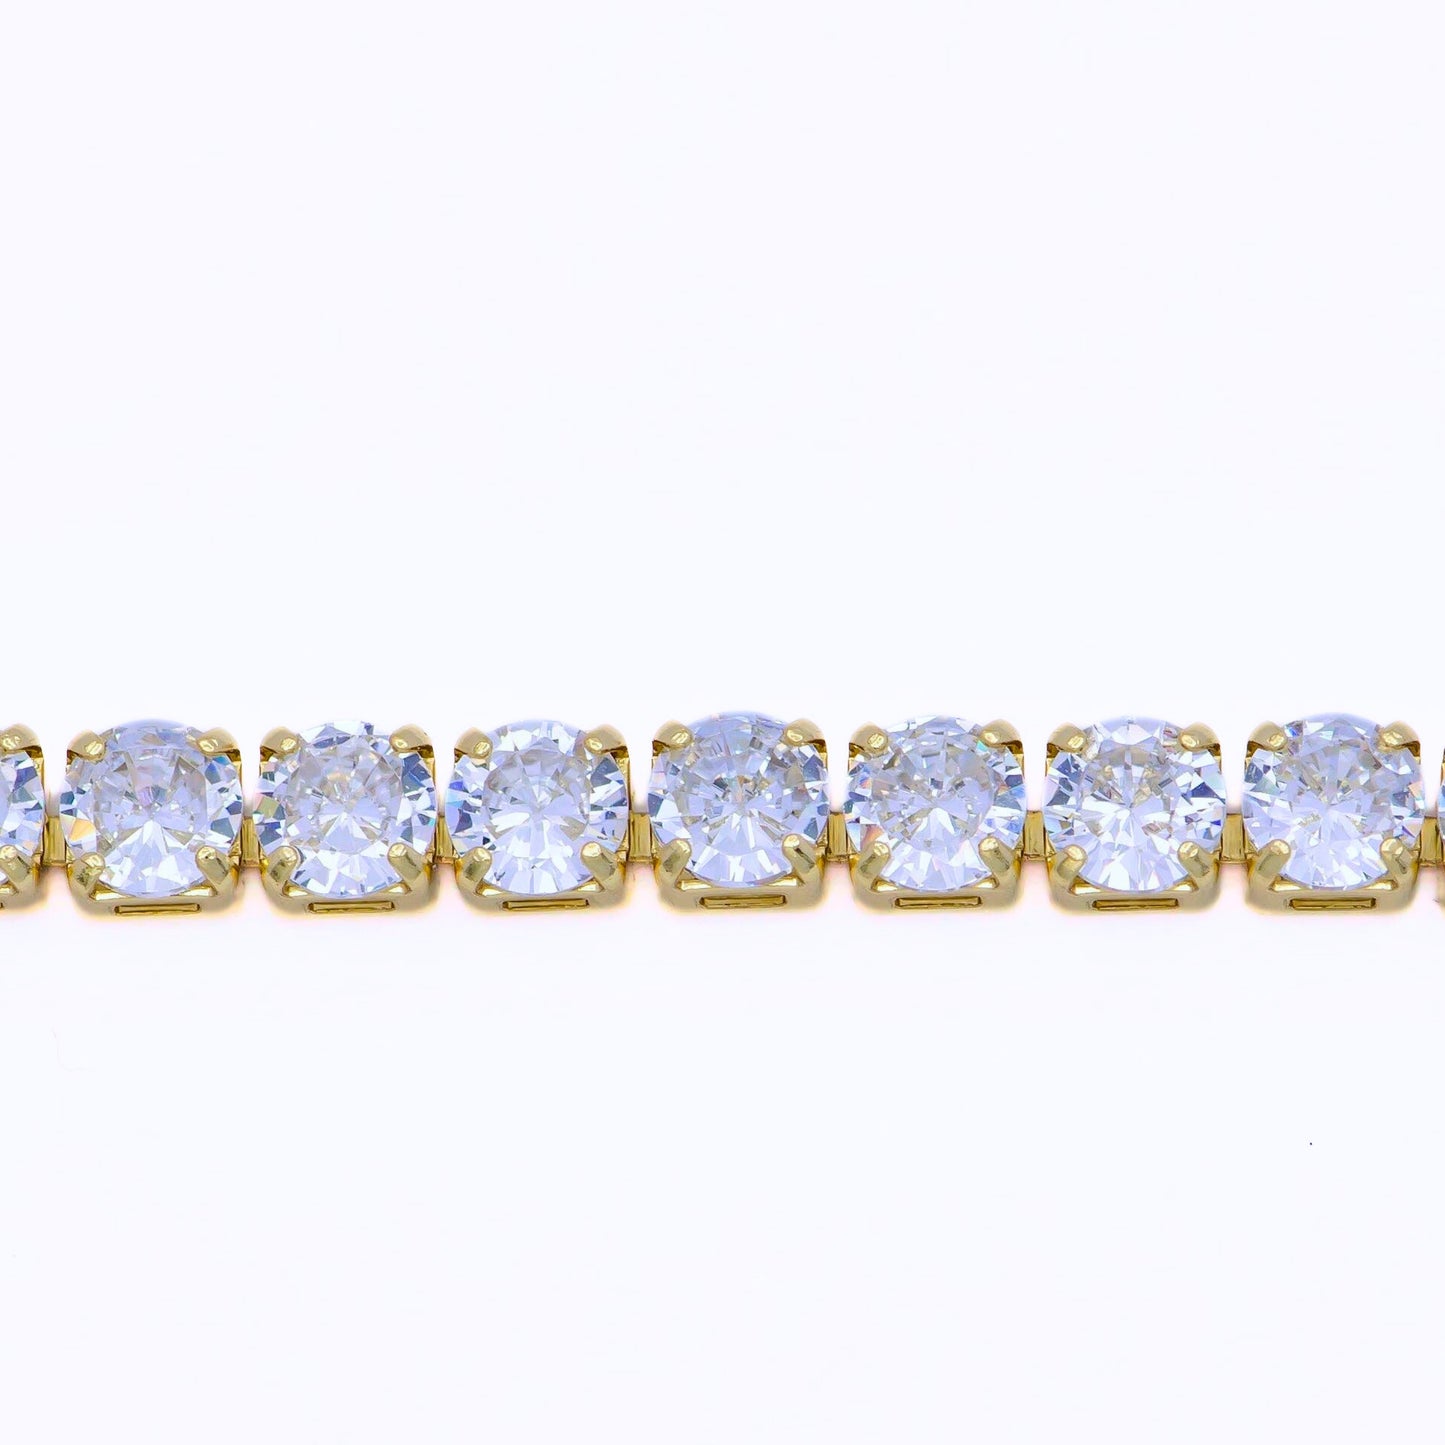 a yellow gold tennis bracelet with a row of CZ diamonds